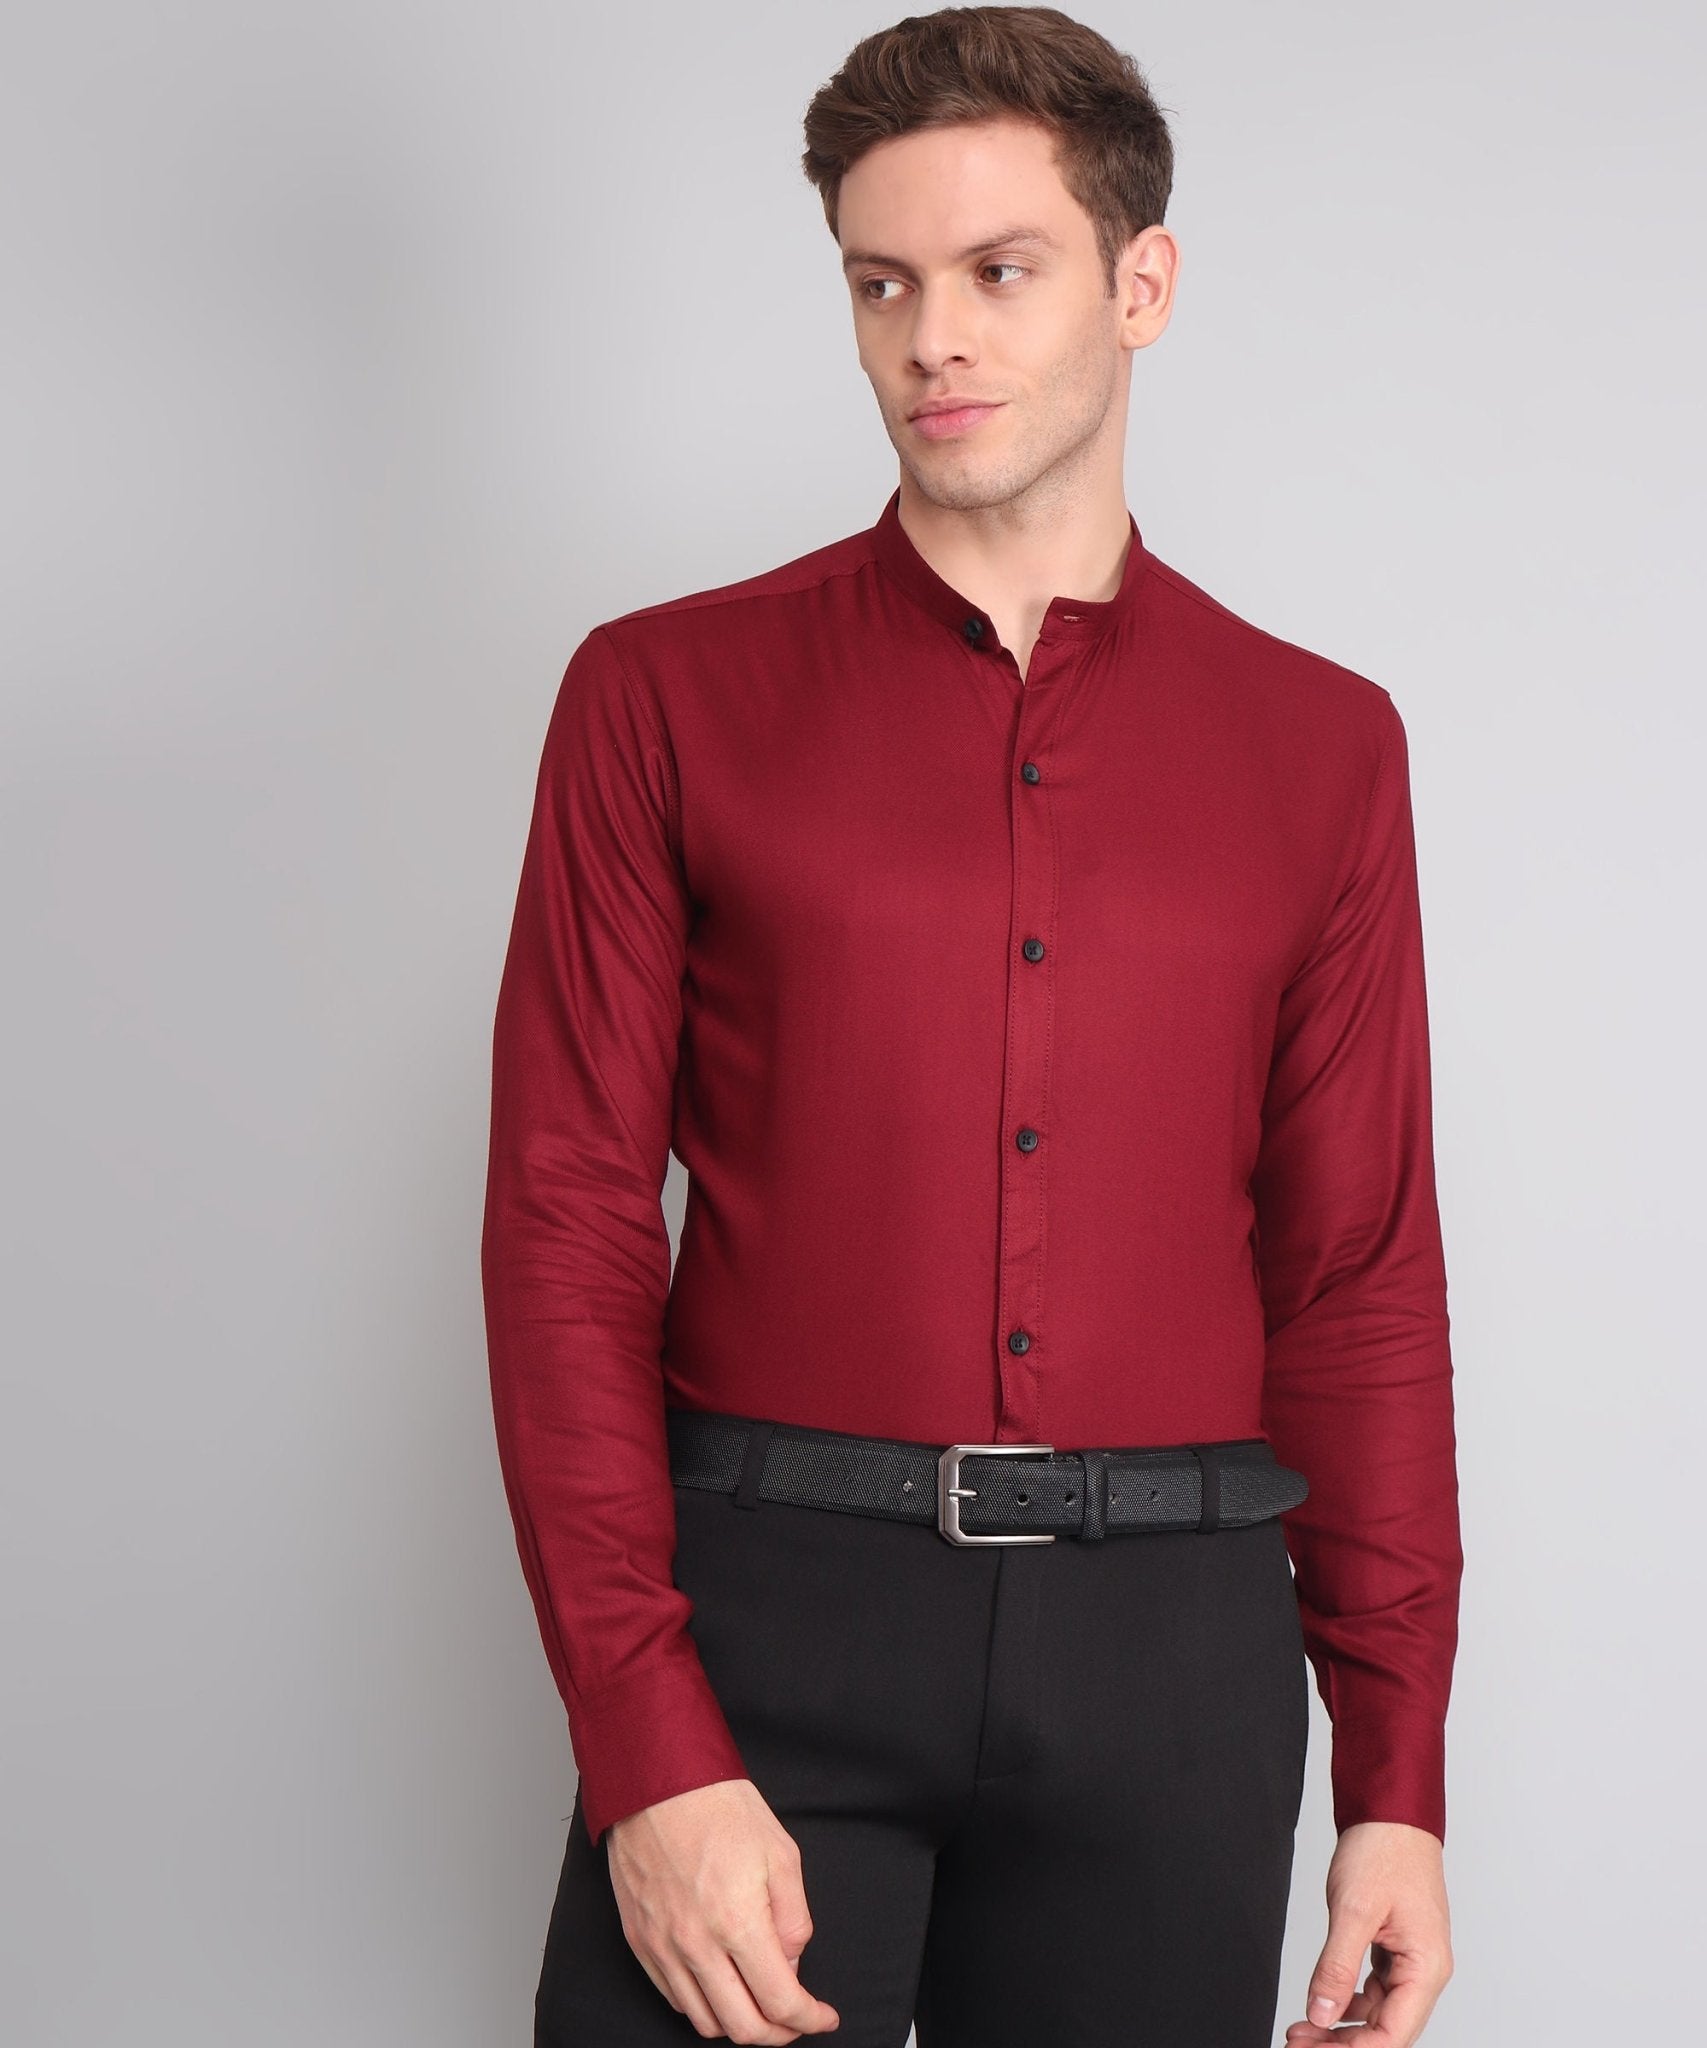 TryBuy Premium Luxurious Full Sleeves Mandarin Collar Maroon Cotton Casual Shirt for Men - TryBuy® USA🇺🇸